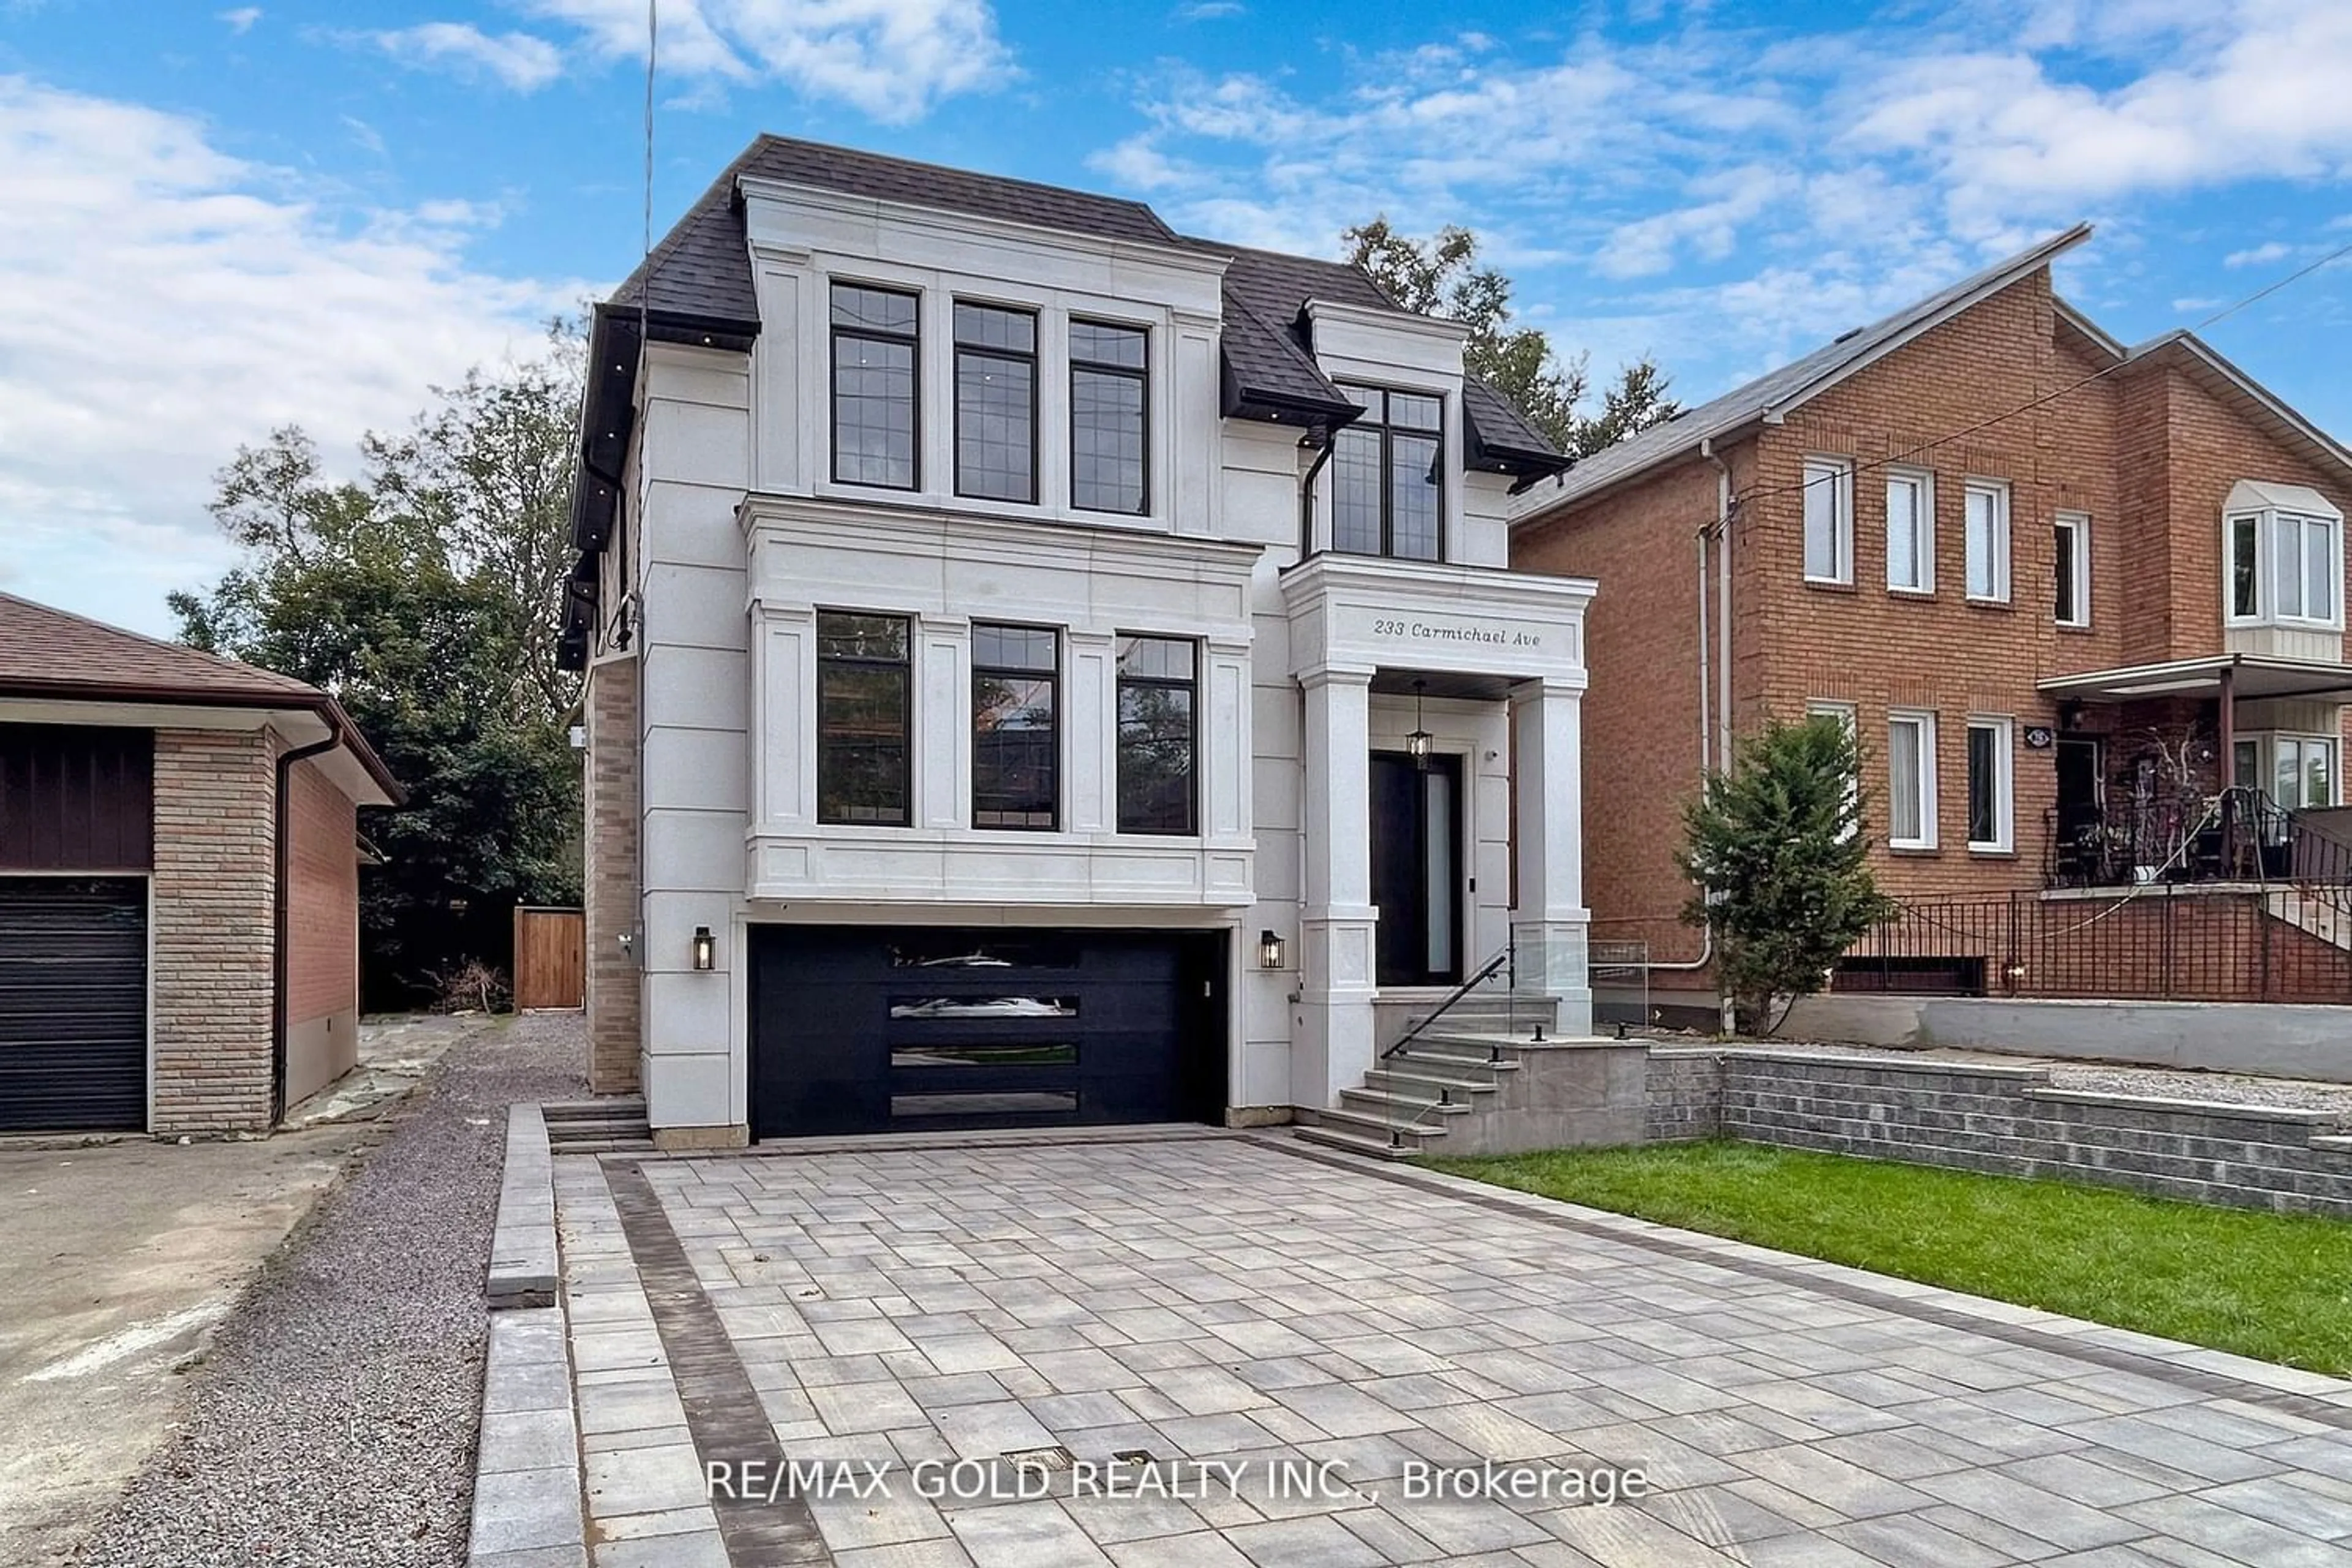 Home with brick exterior material for 233 Carmichael Ave, Toronto Ontario M5M 2X5